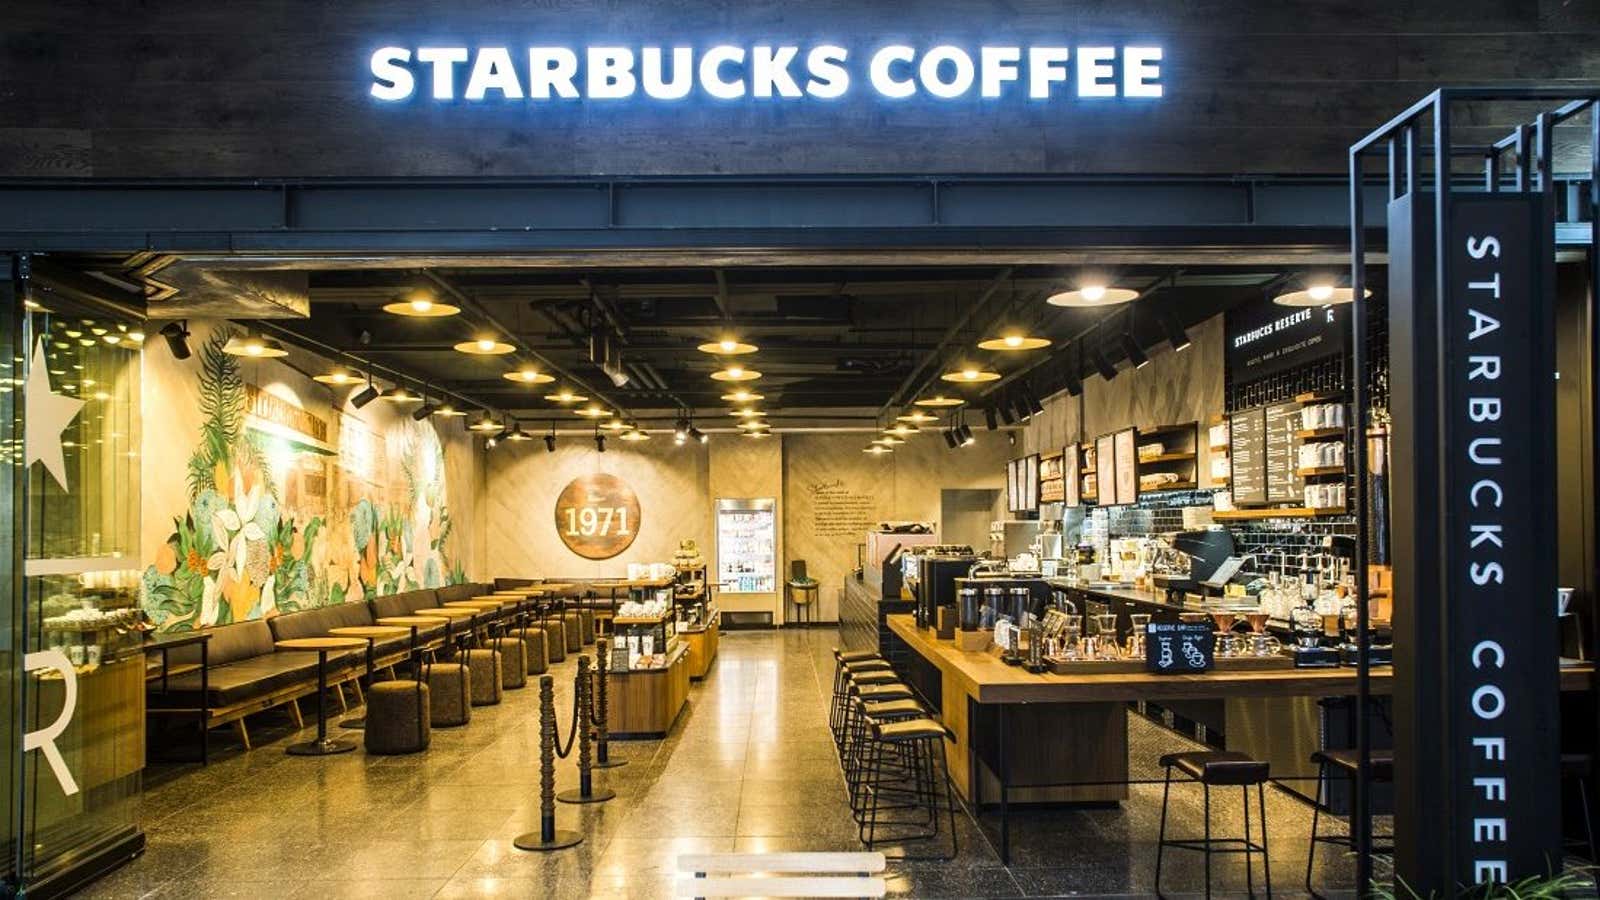 Starbucks, South Africa